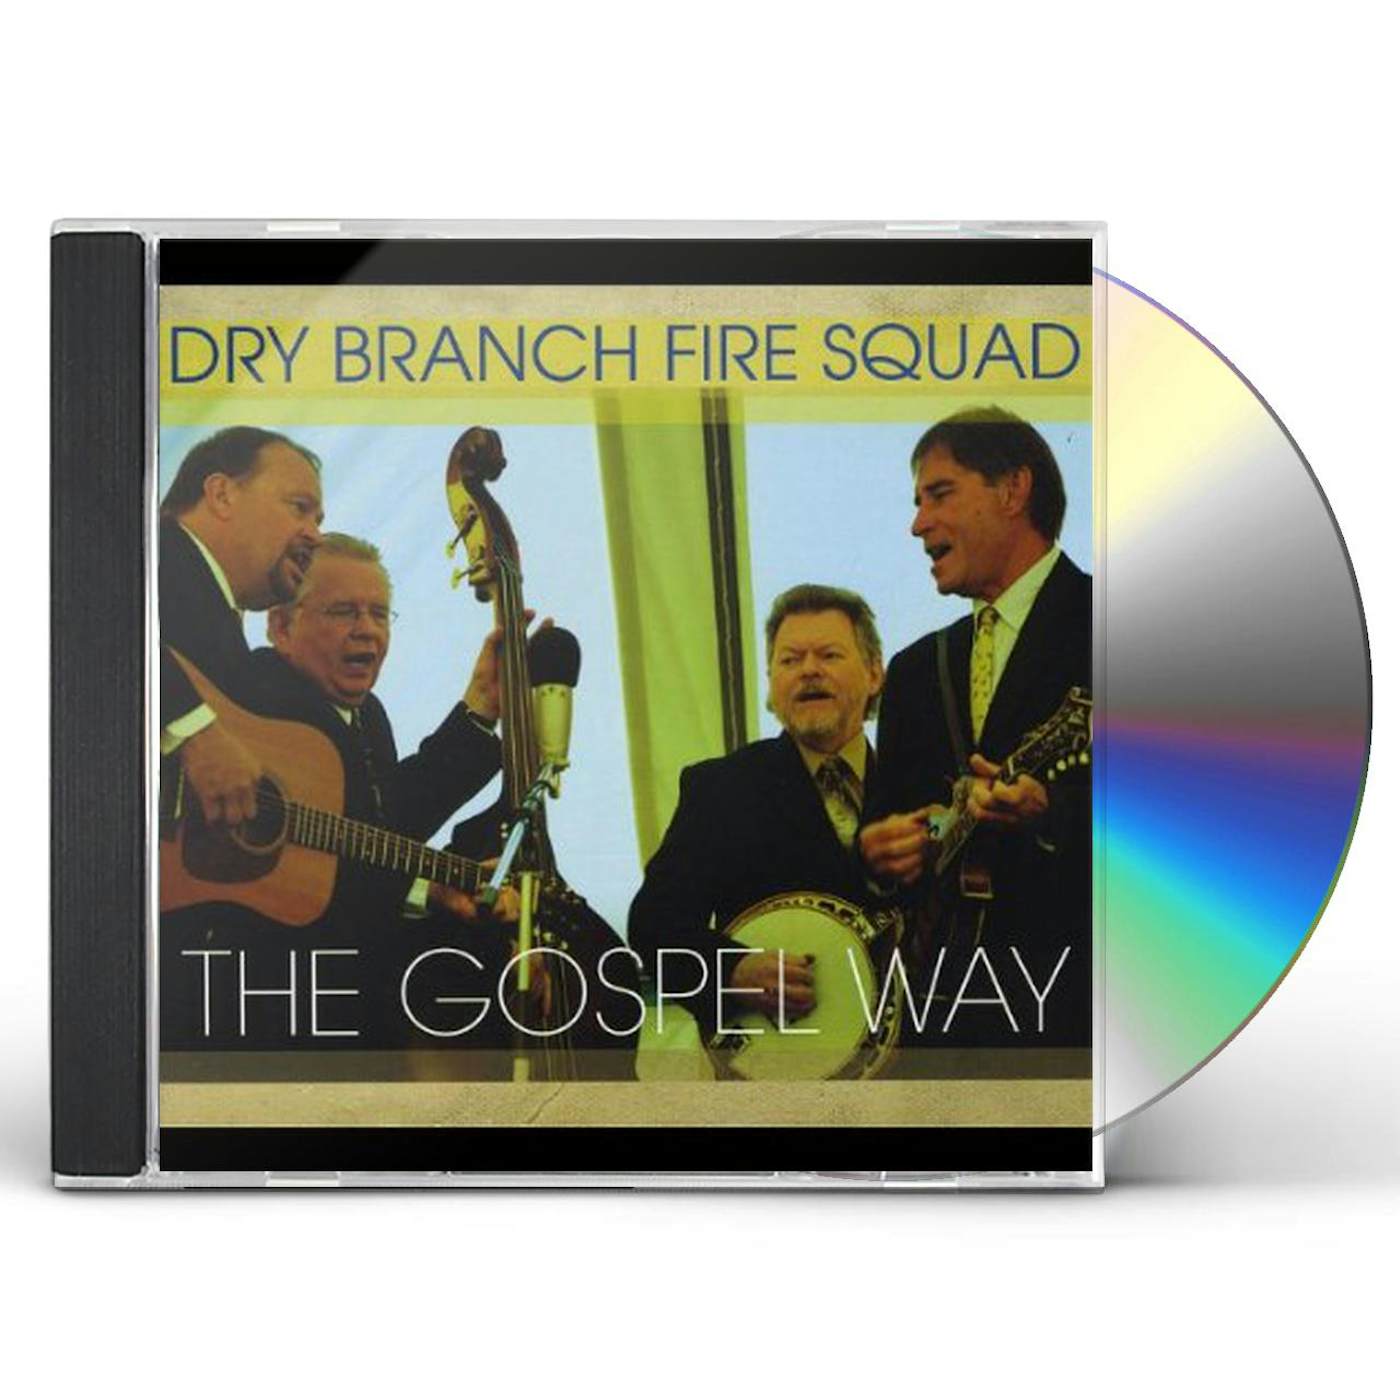 Dry Branch Fire Squad GOSPEL WAY CD